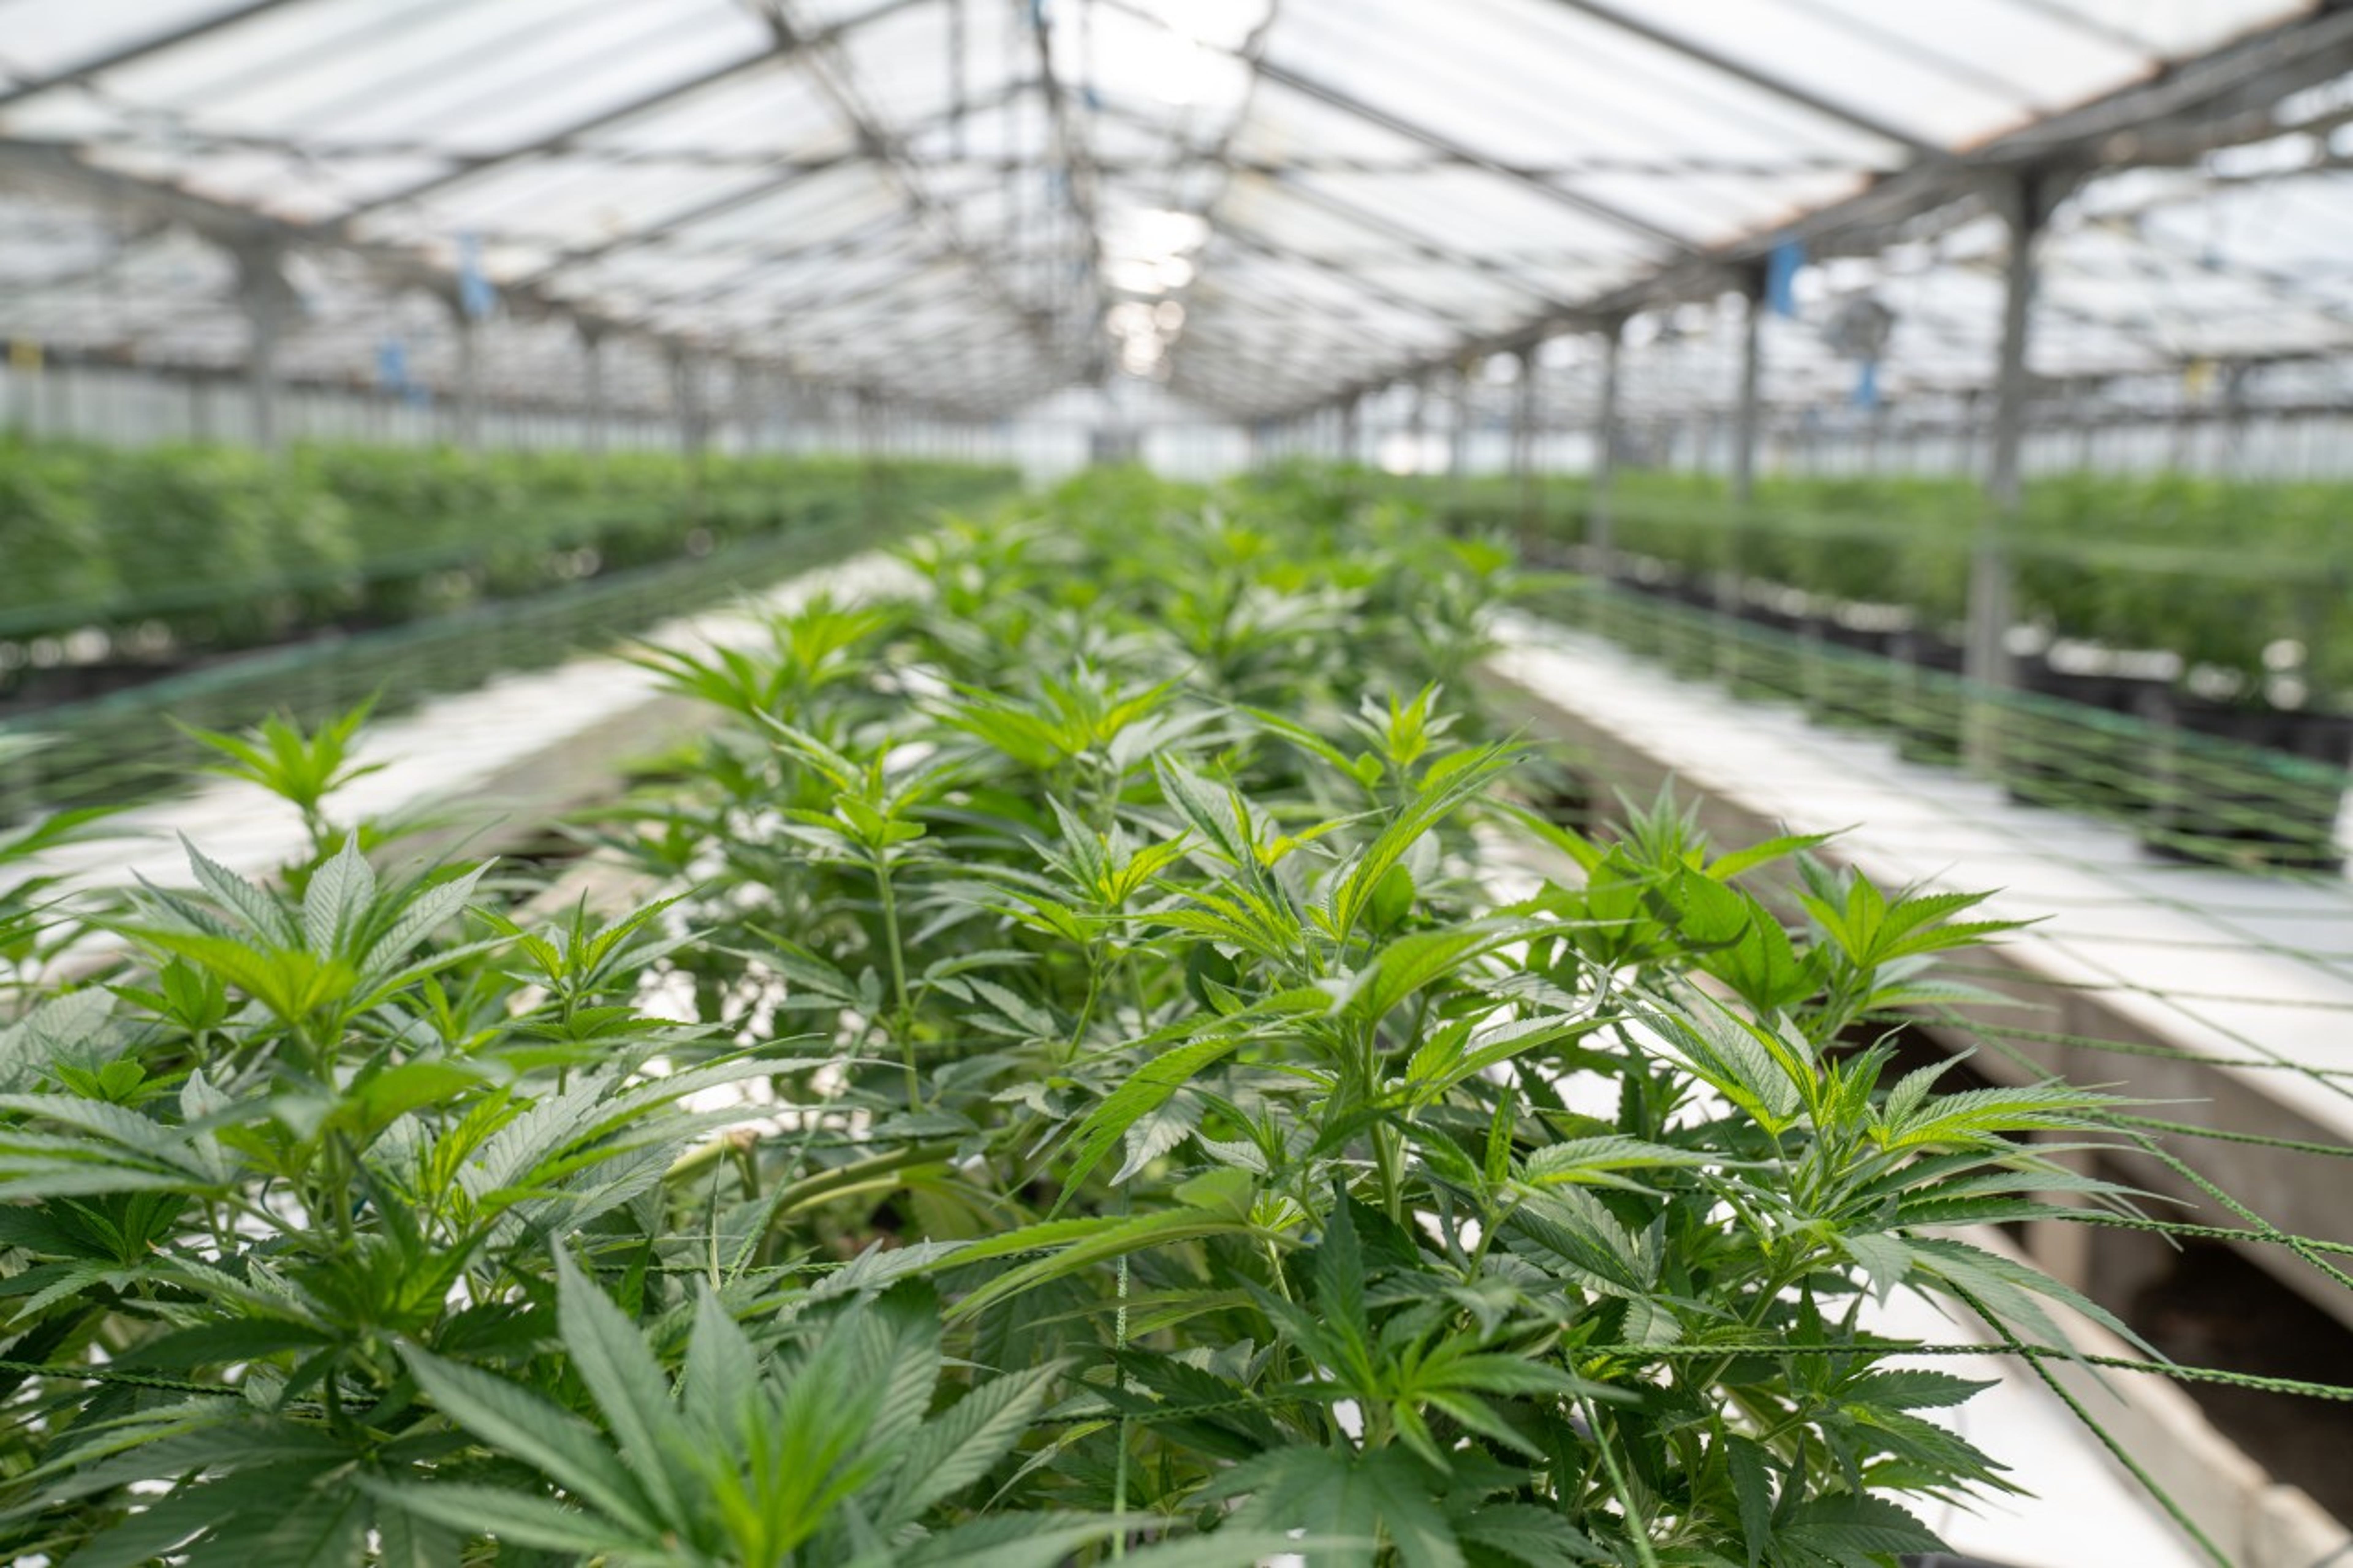 Medical Marijuana Signs Distribution Agreement With Complete Hemp Technologies